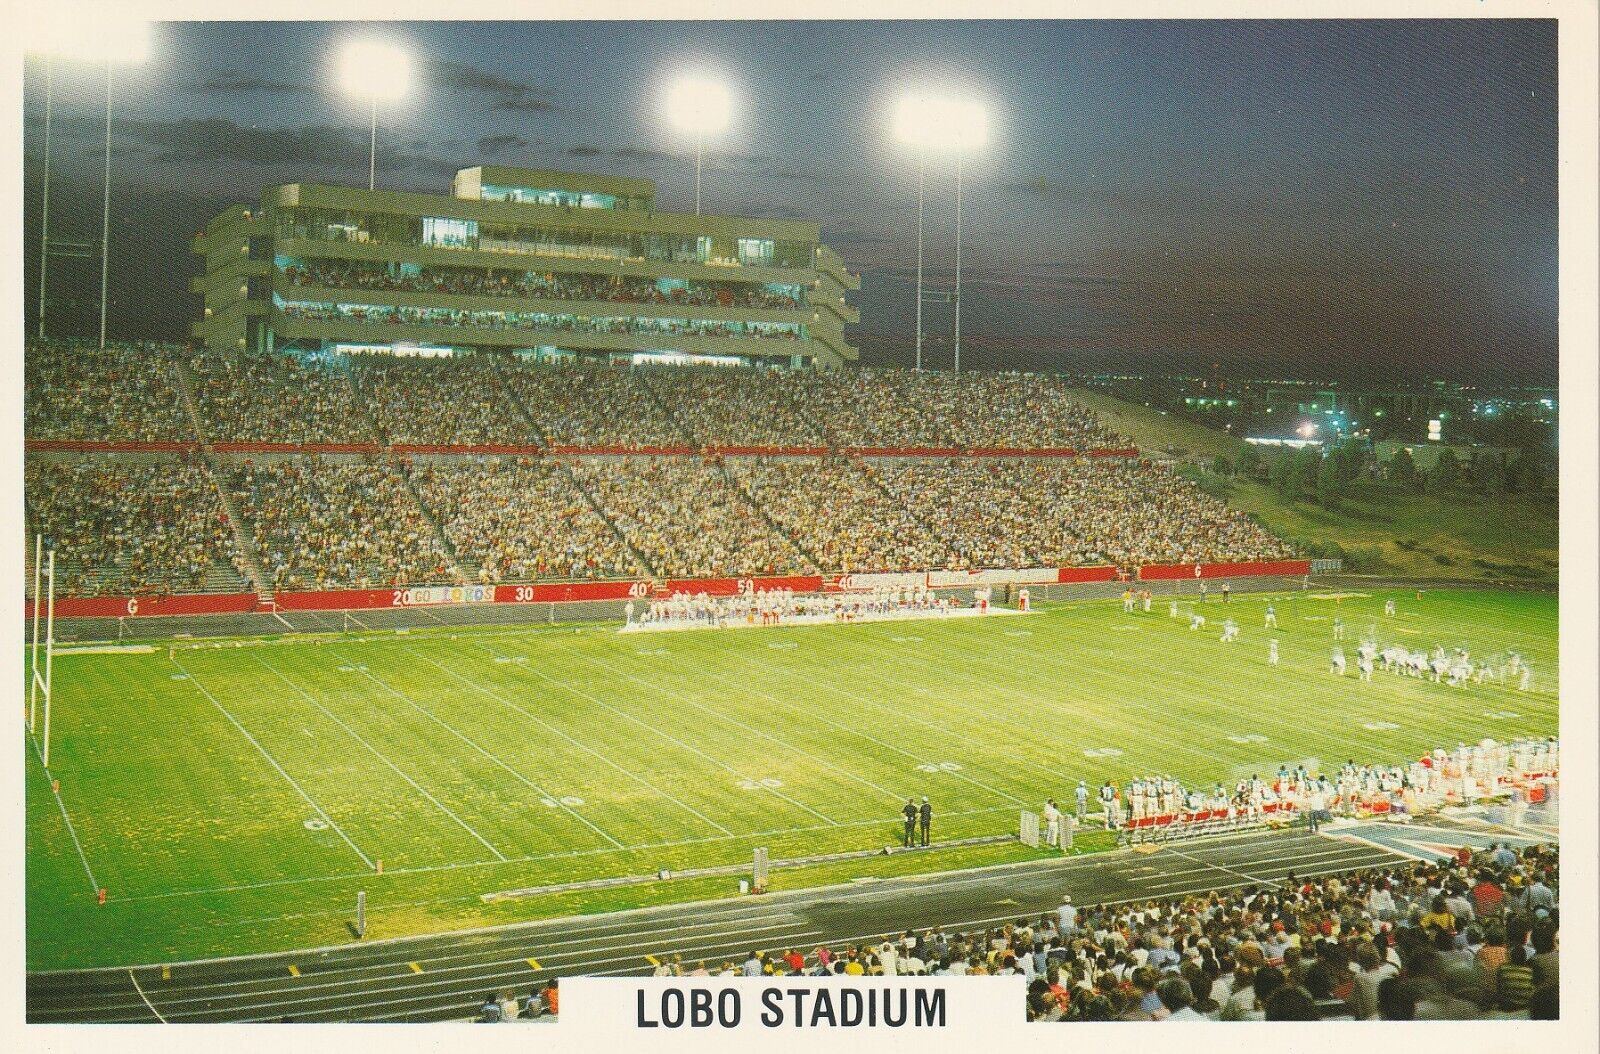 University of New Mexico Lobos Football Stadium Postcard - Dreamstyle Stadium